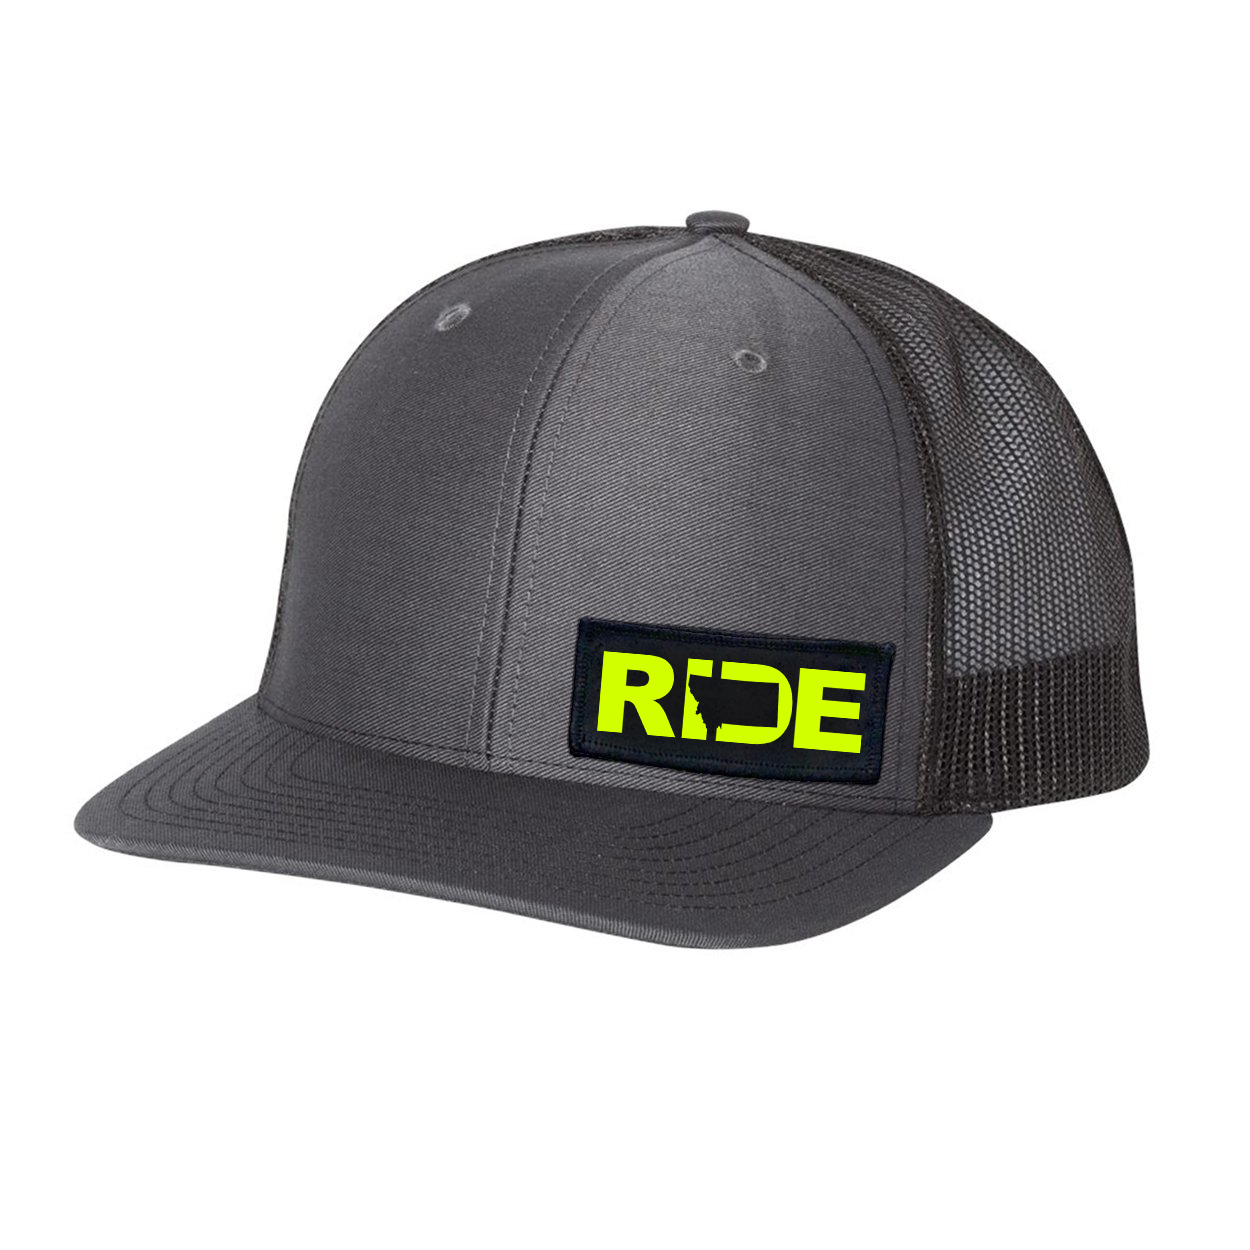 Ride Montana Night Out Woven Patch Flex-Fit Hat Dark Gray/Black (Hi-Vis Logo)